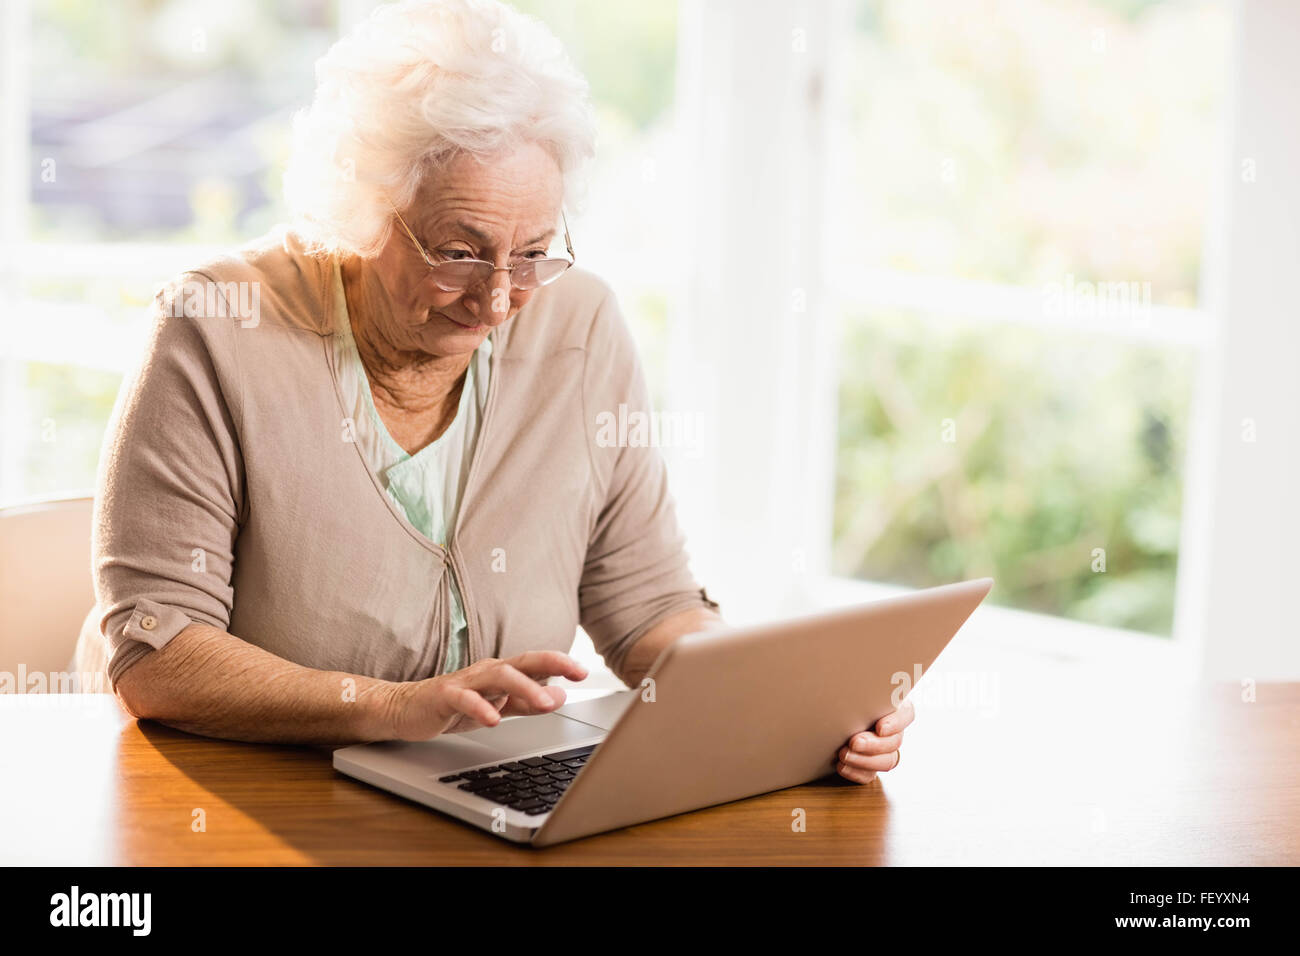 Focused senior woman using laptop Stock Photo